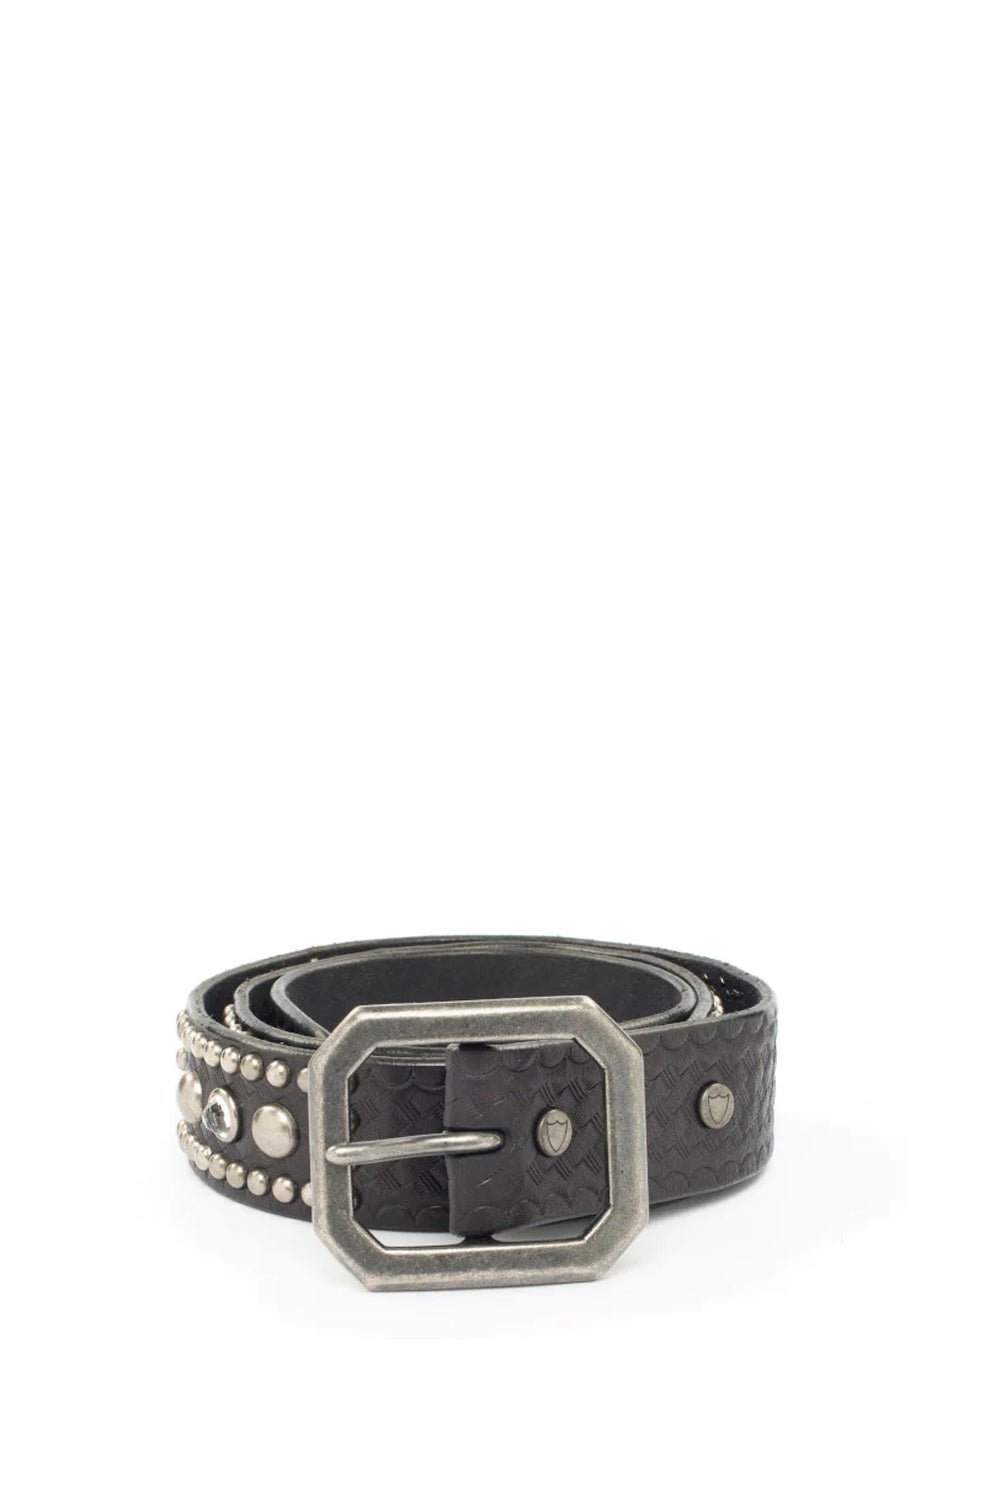 ROADHOUSE BELT Cintura in pelle nera con borchie e strass. Altezza: 4 cm. Made in Italy HTC LOS ANGELES